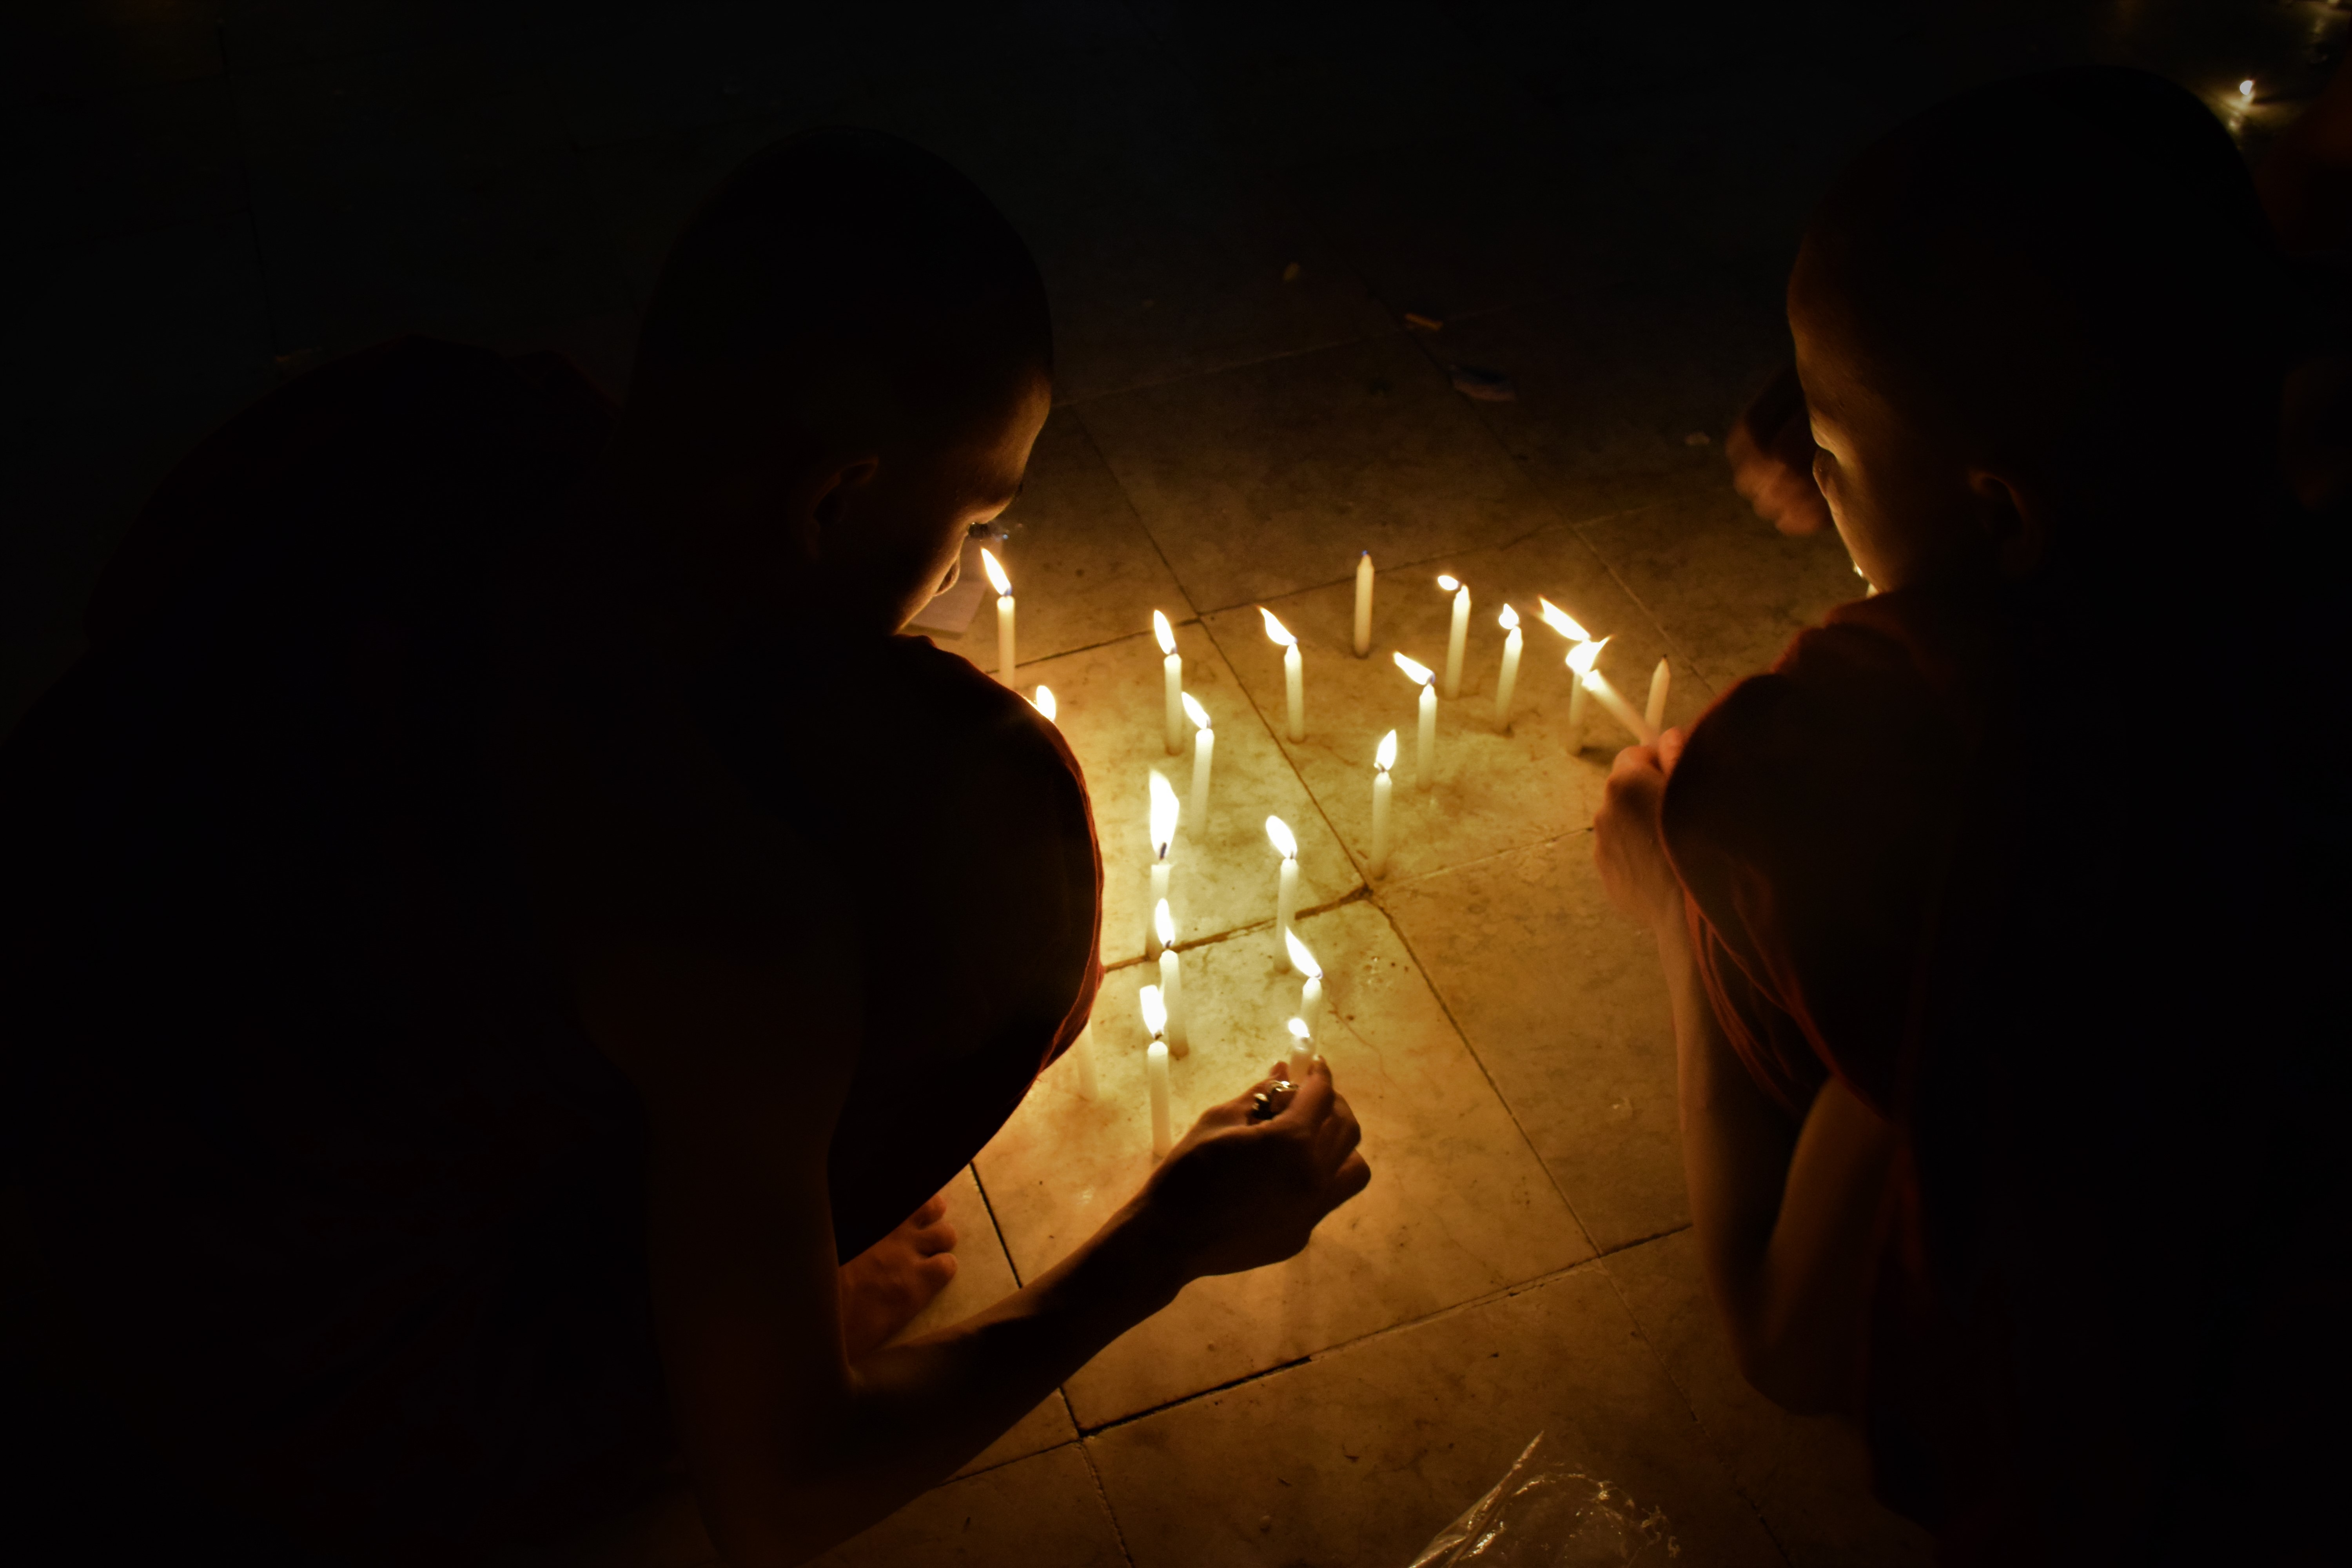 Two novices at lighting festival  Myanmar 